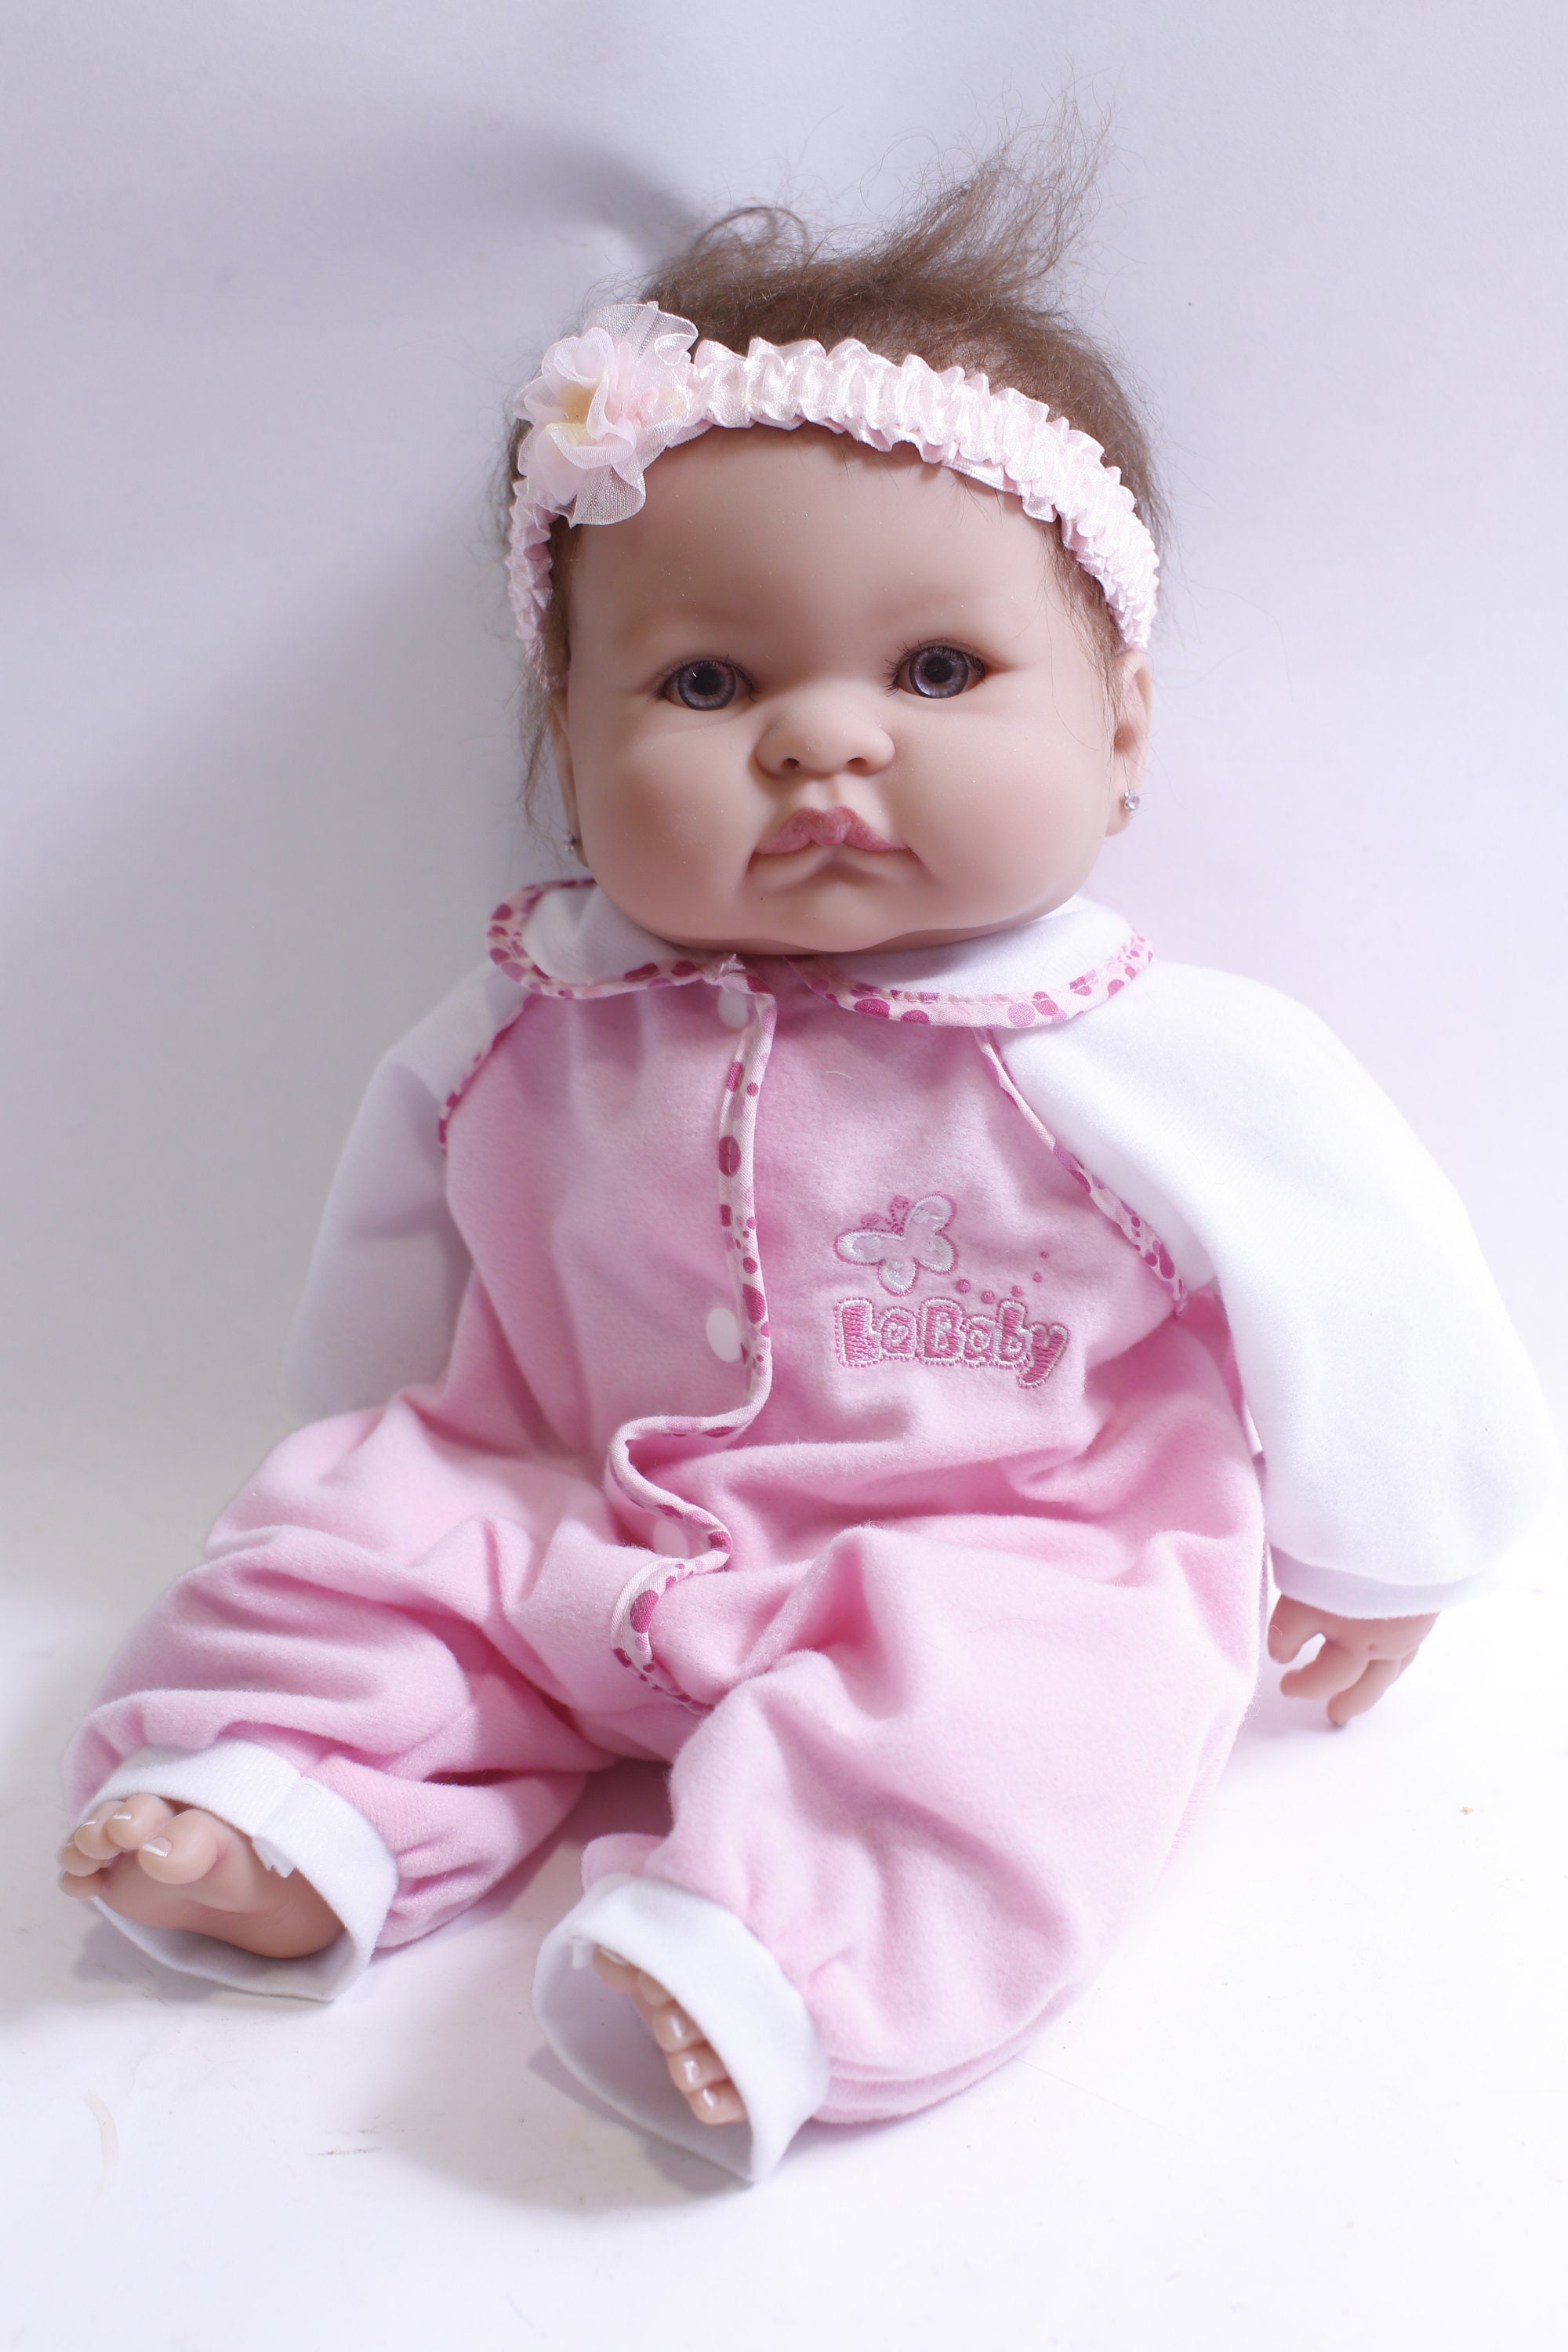 Angelbaby Lifelike Asleep Reborn Real Life Baby Dolls, 20 inch Newborn Baby  Girl Alive Dolls Soft Silicone Handmade Realistic Fat Face Bebe Reborn